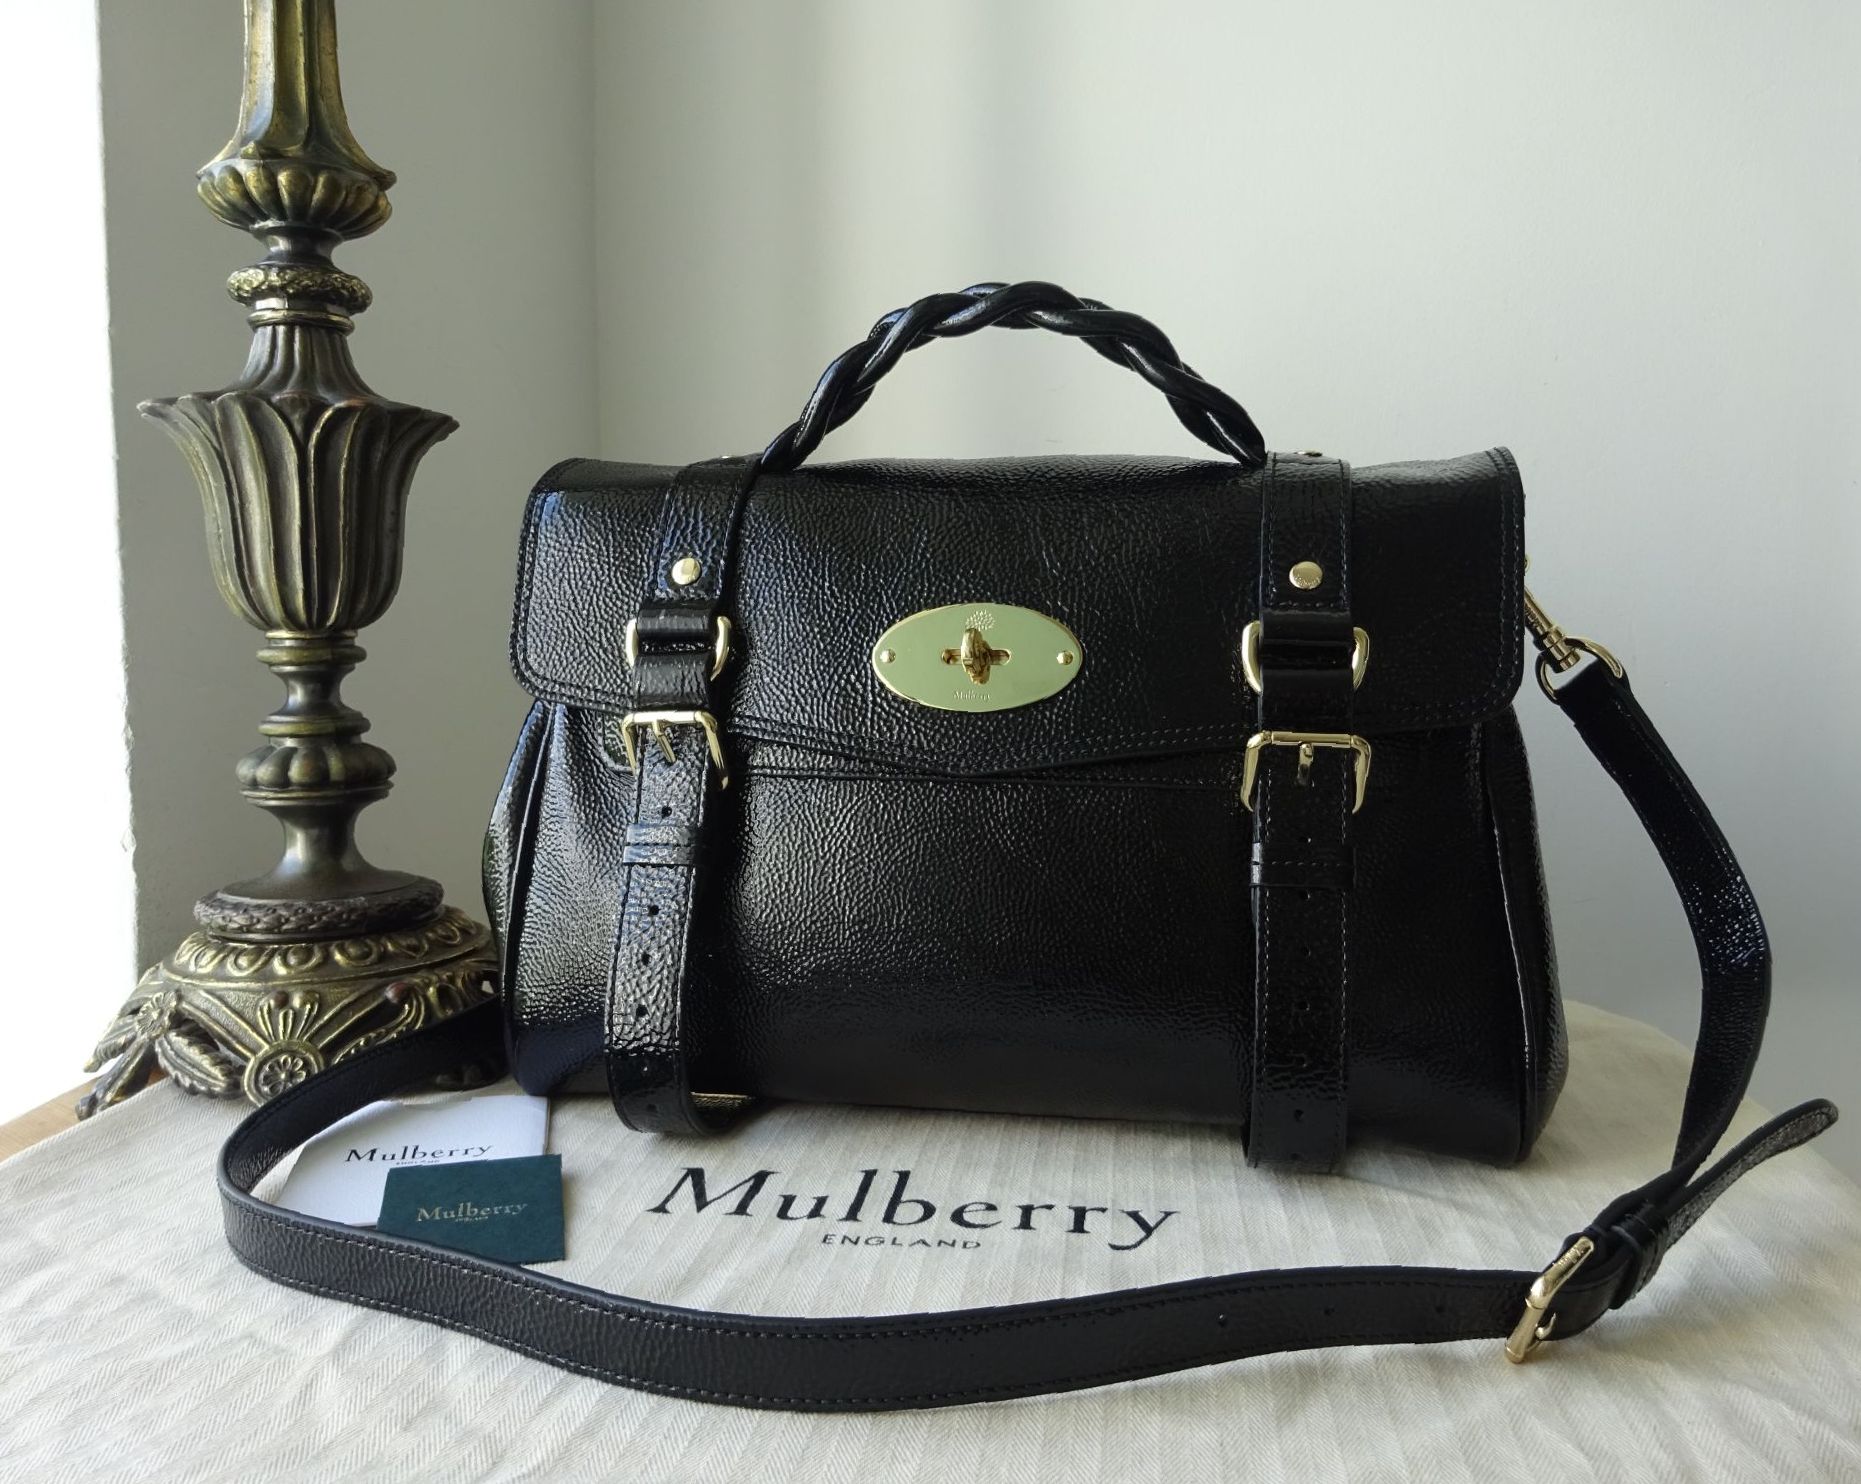 Mulberry Bespoke Alexa Satchel in Black Spongy Patent Leather